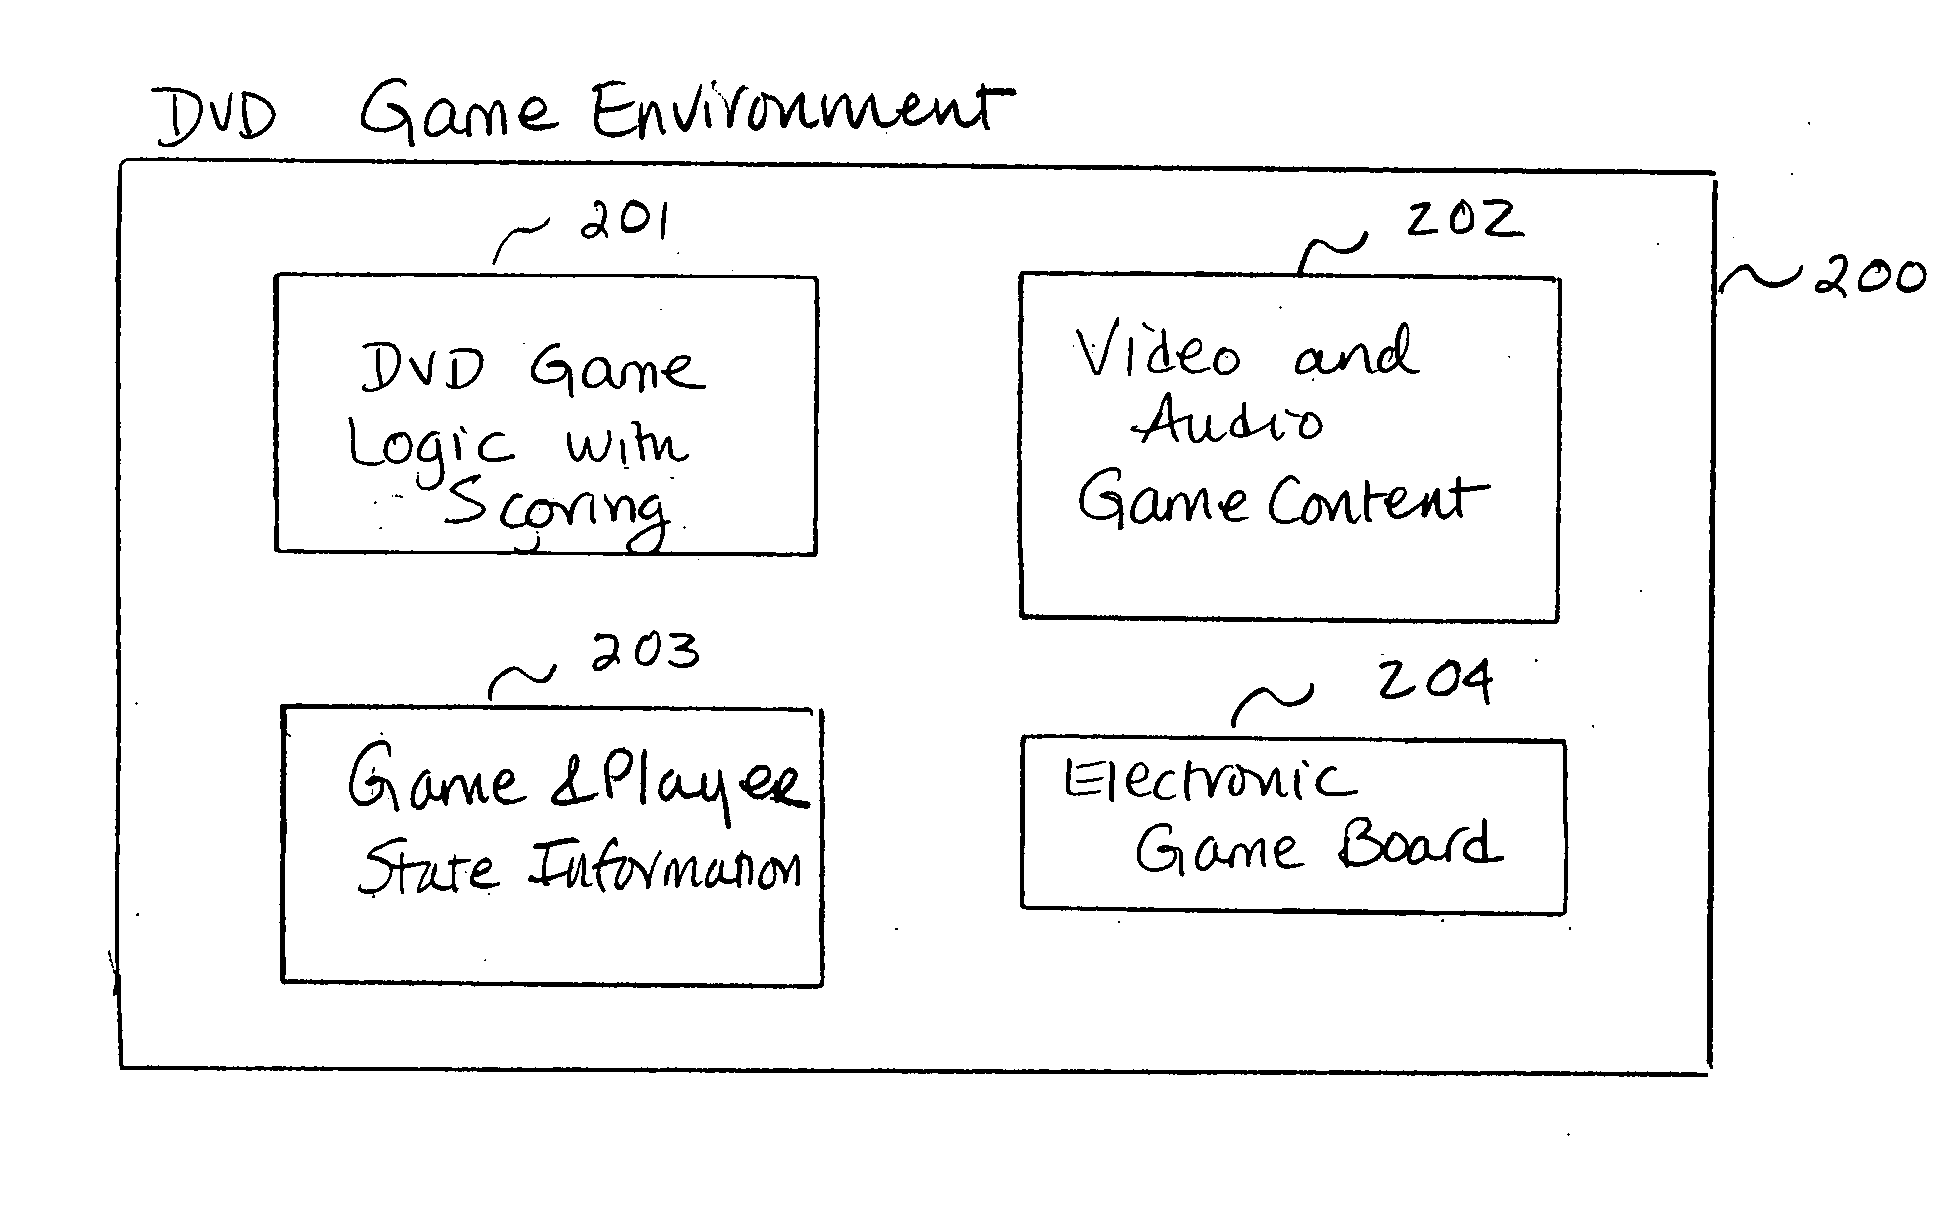 DVD game architecture